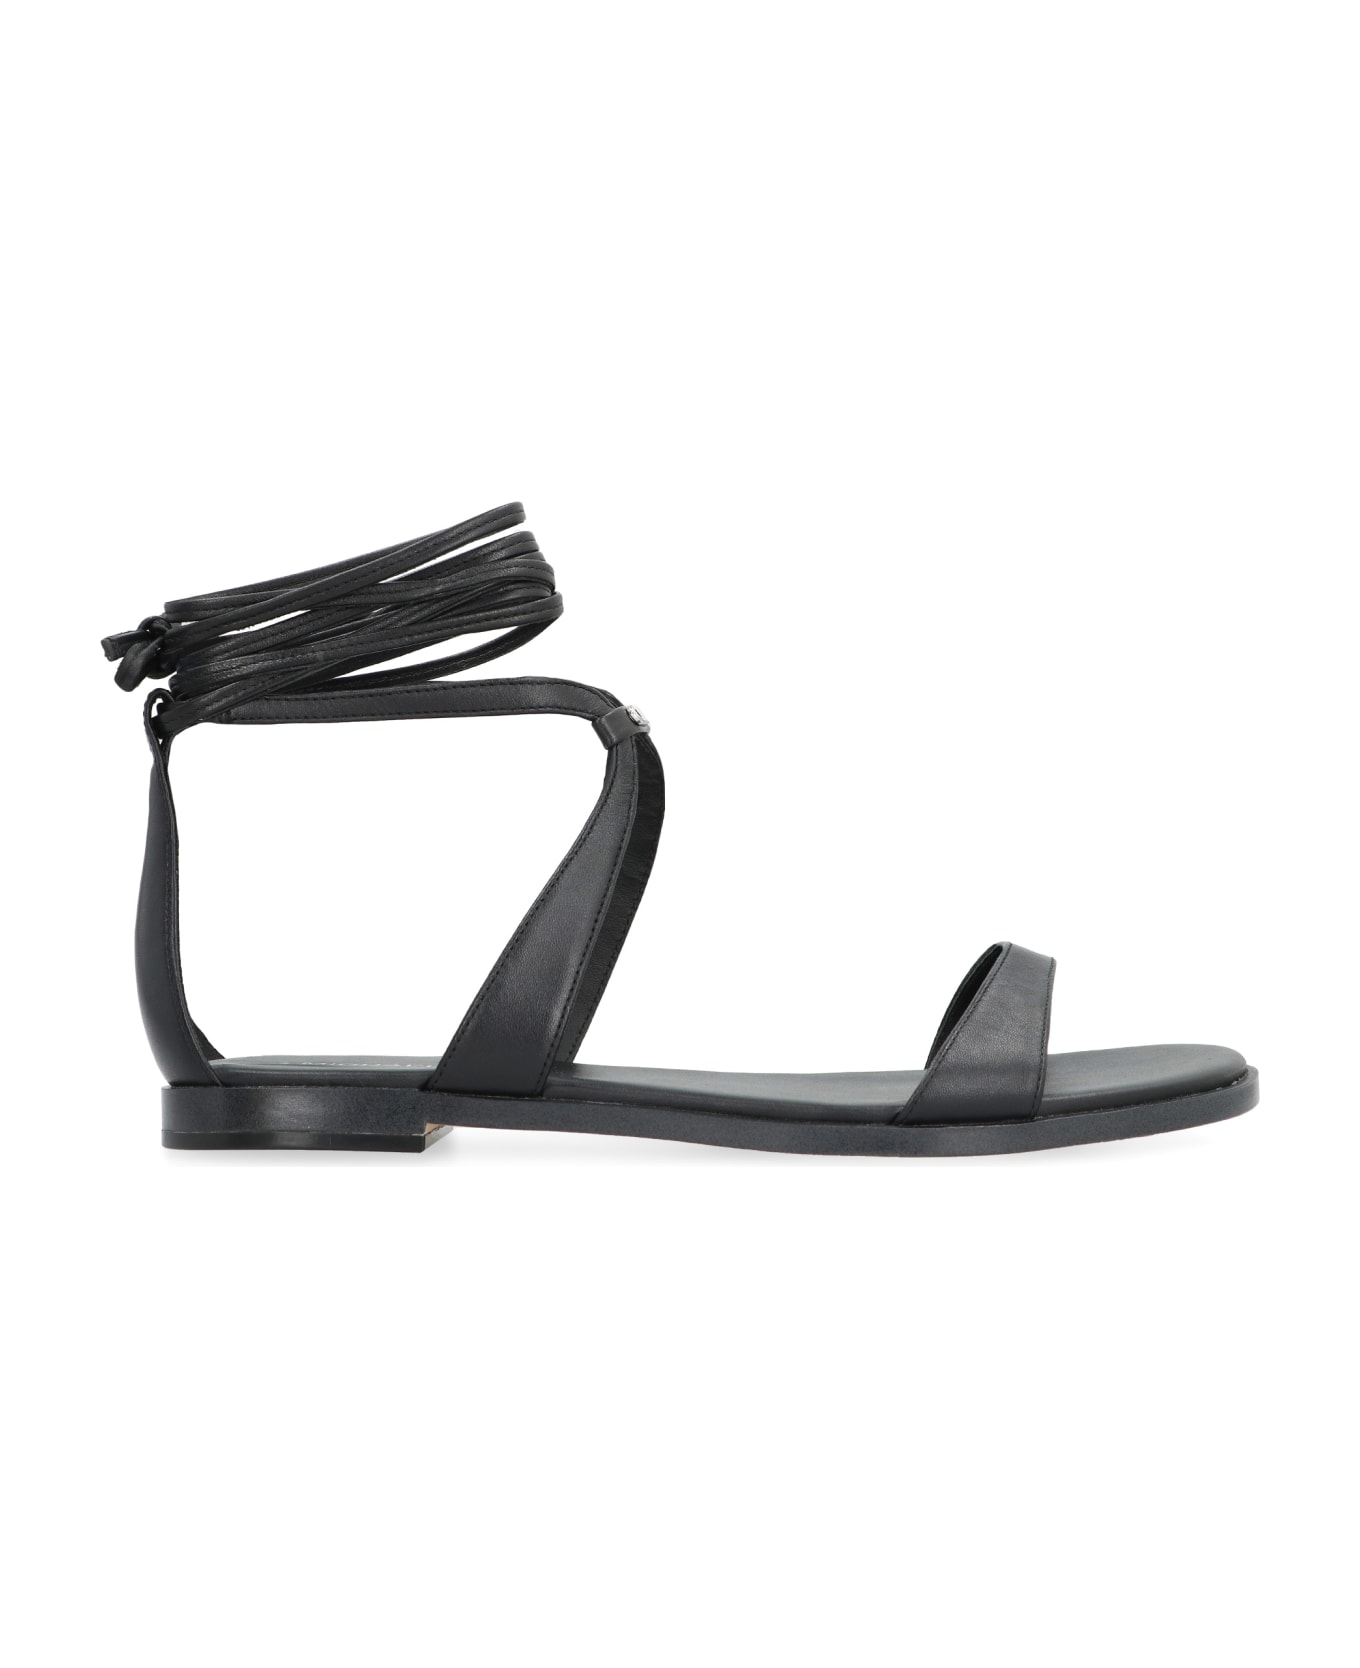 Michael Kors Amara Leather Flat Sandals - black